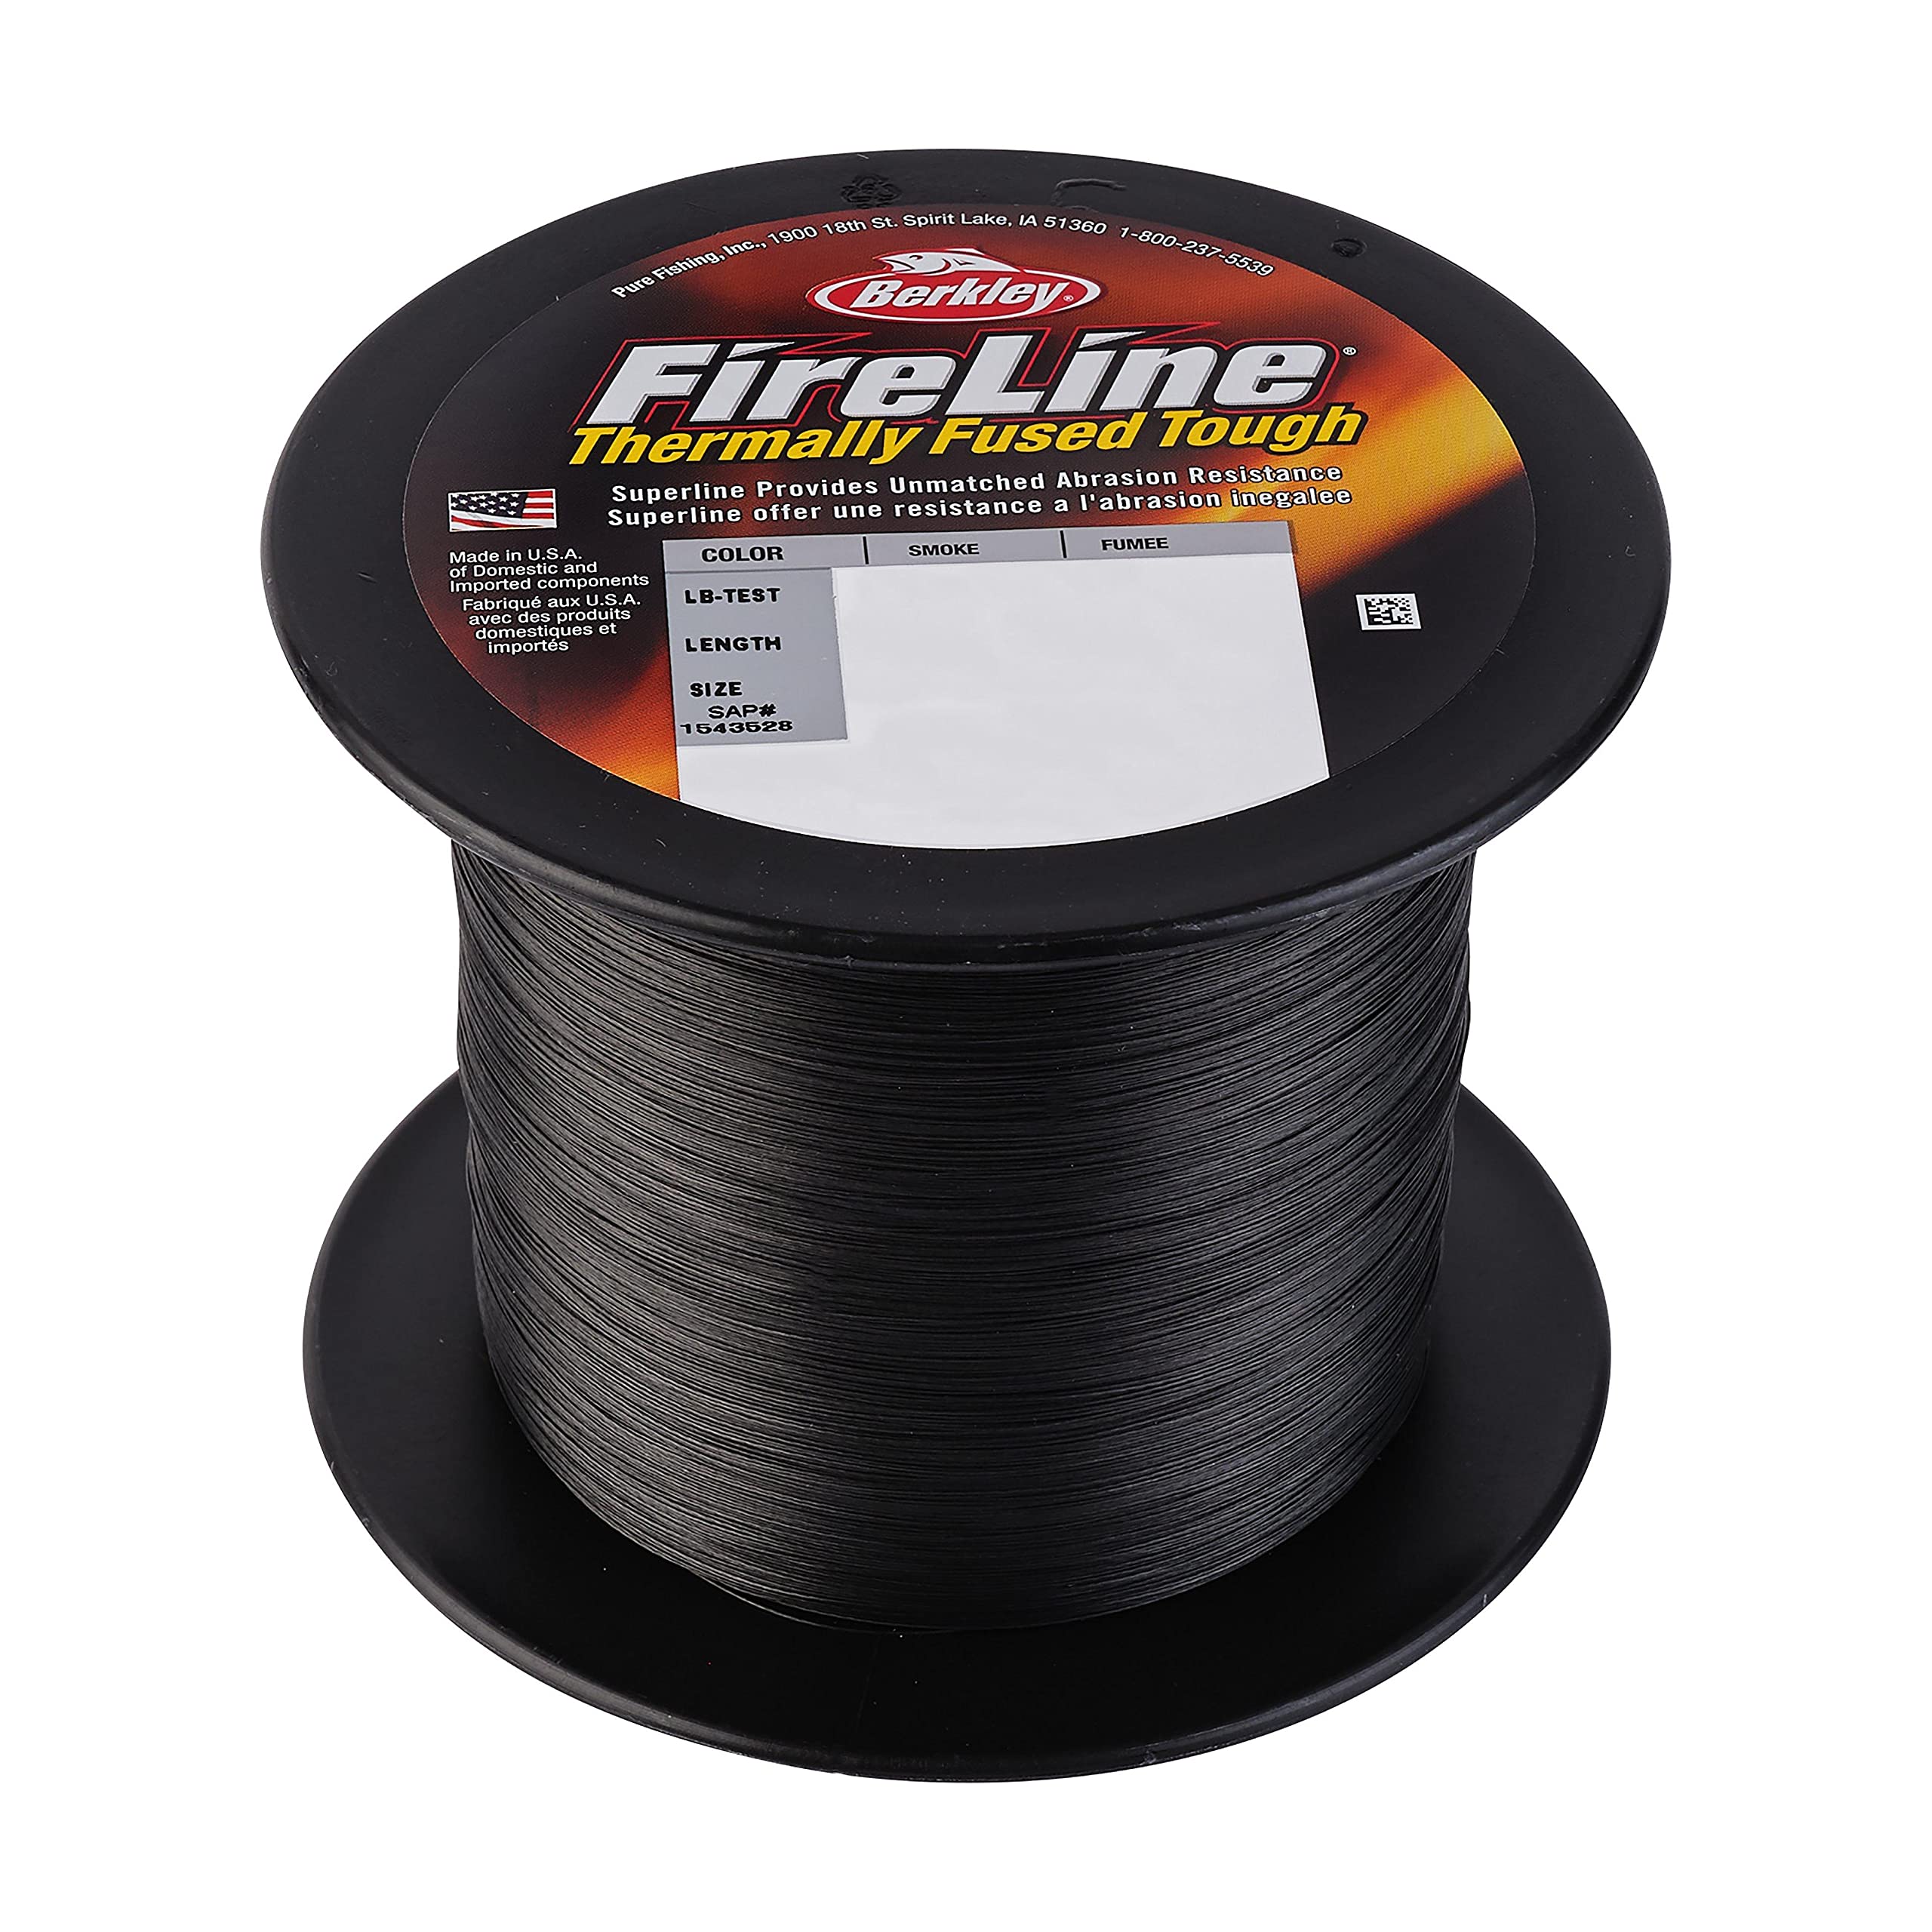 Berkley FireLine Superline Smoke 4lb 1.8kg 1500yd 1371m Fishing Line Suitable for Freshwater Environments